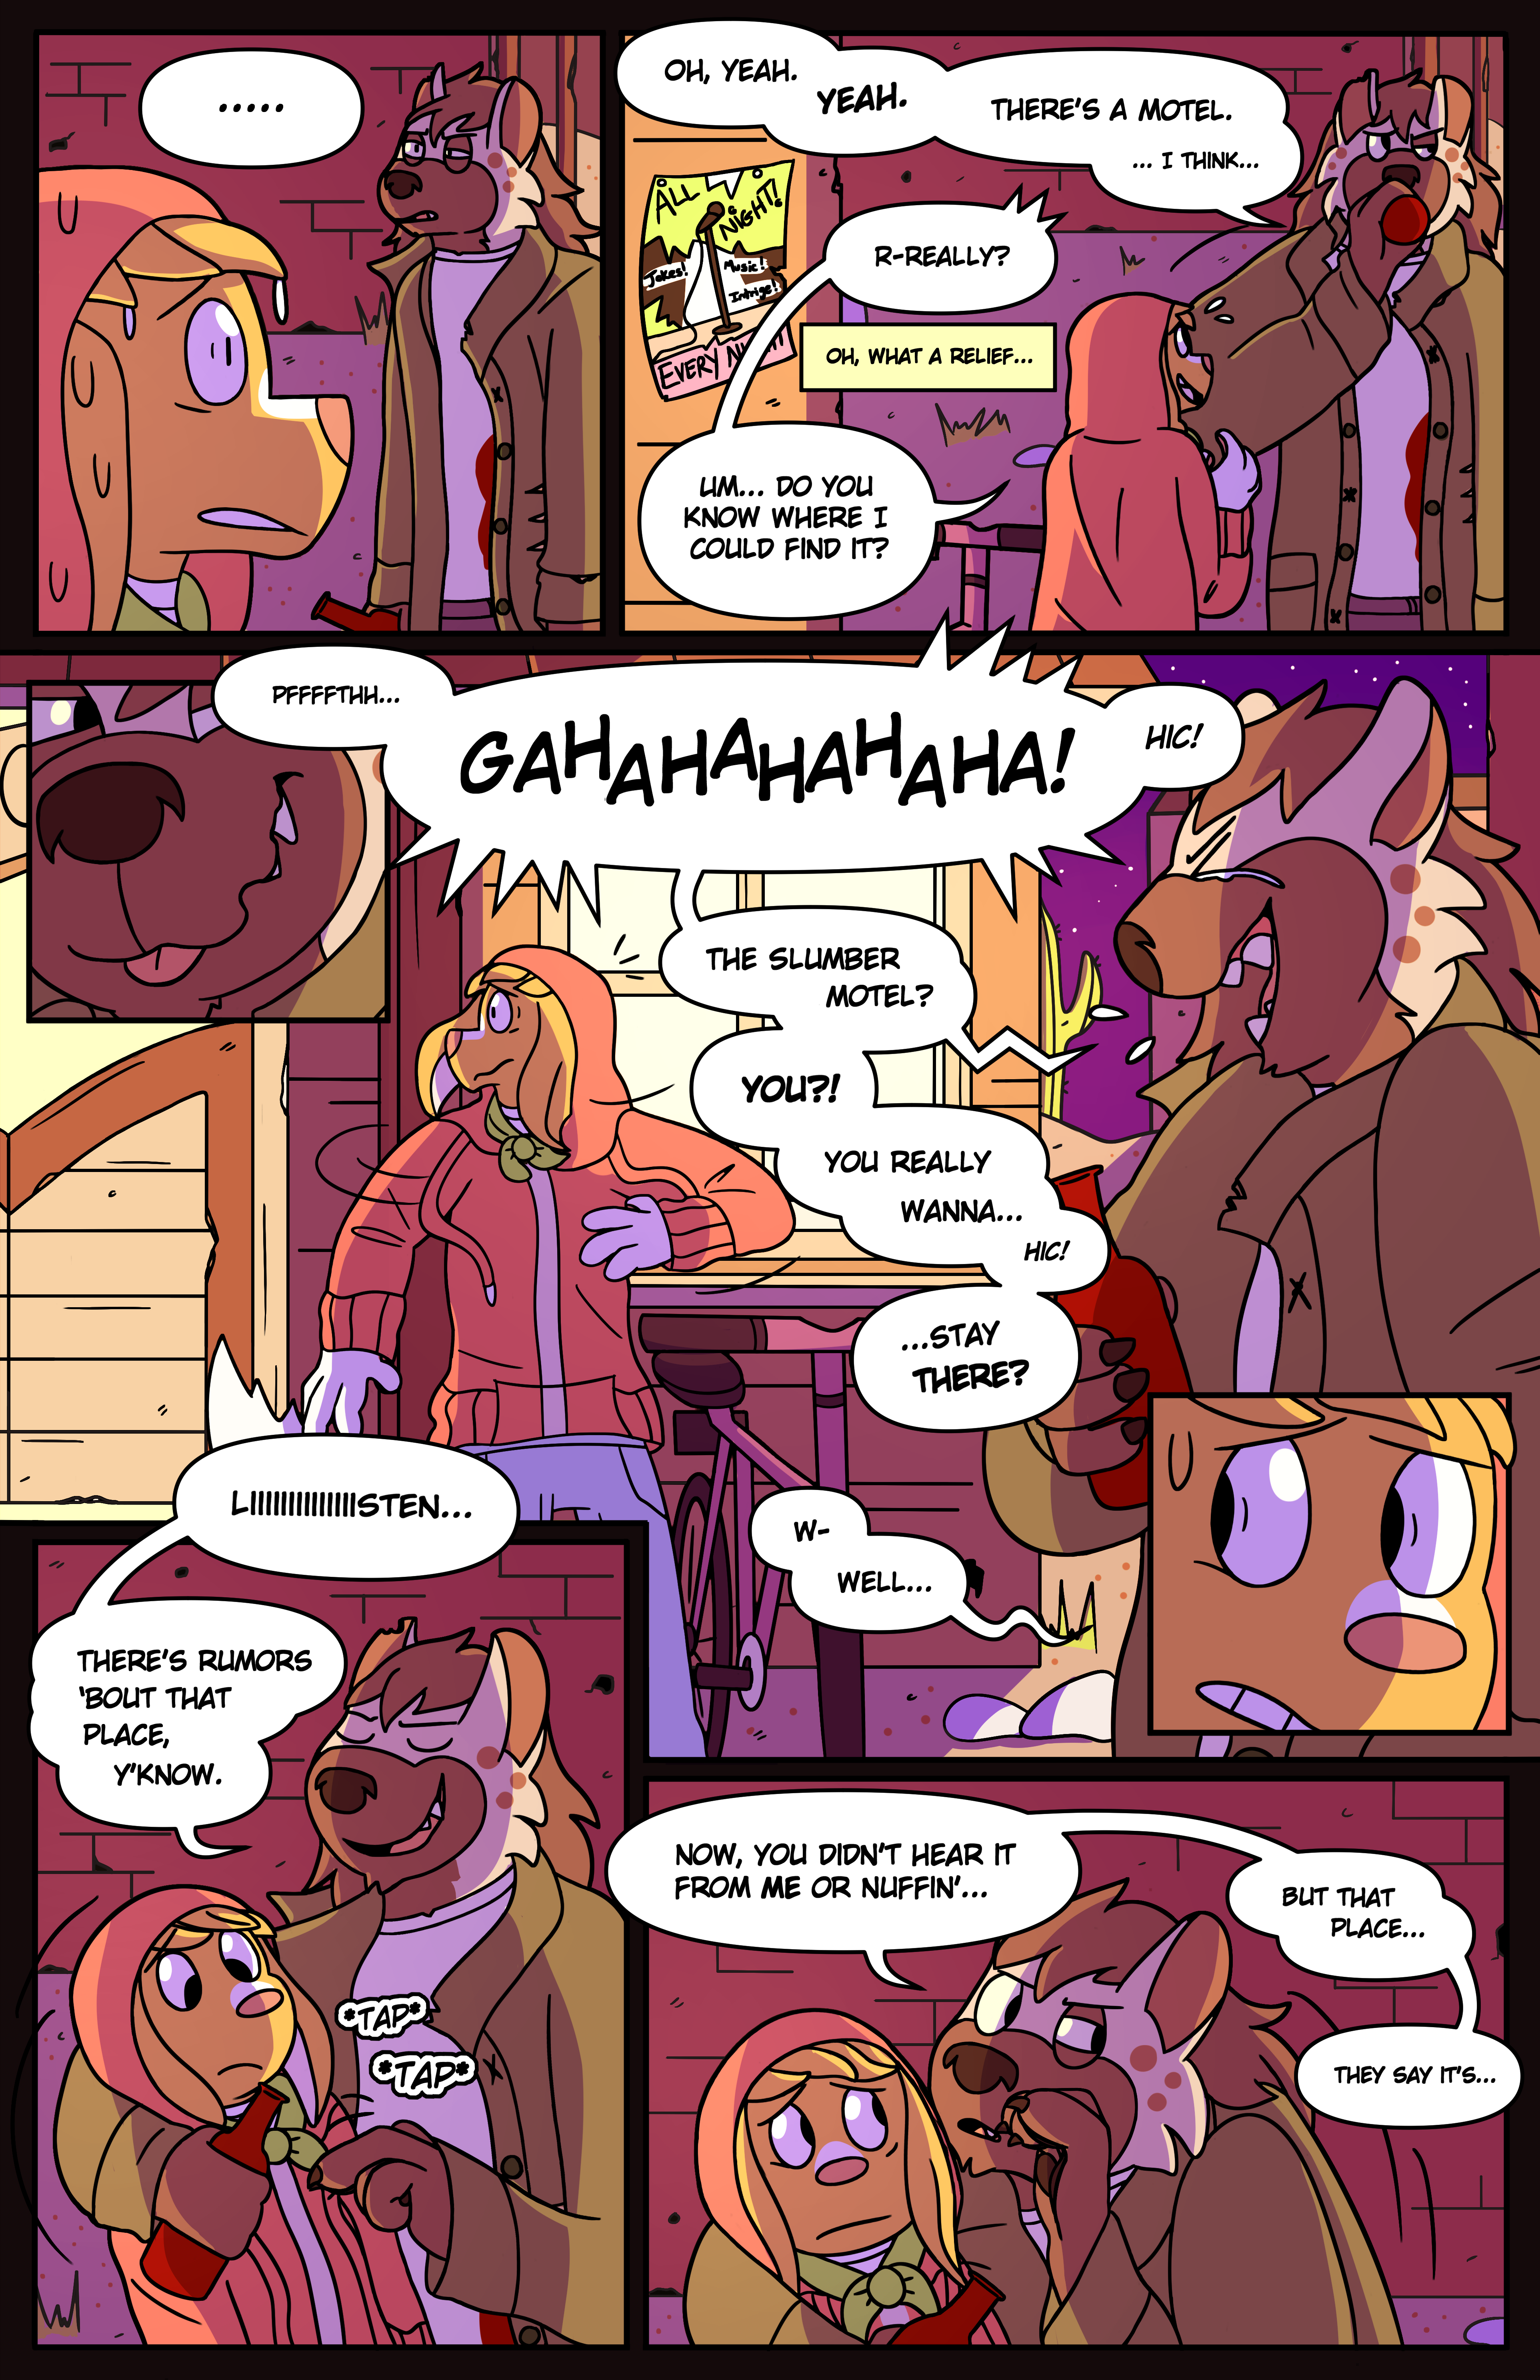 Page 1.9: Rumors